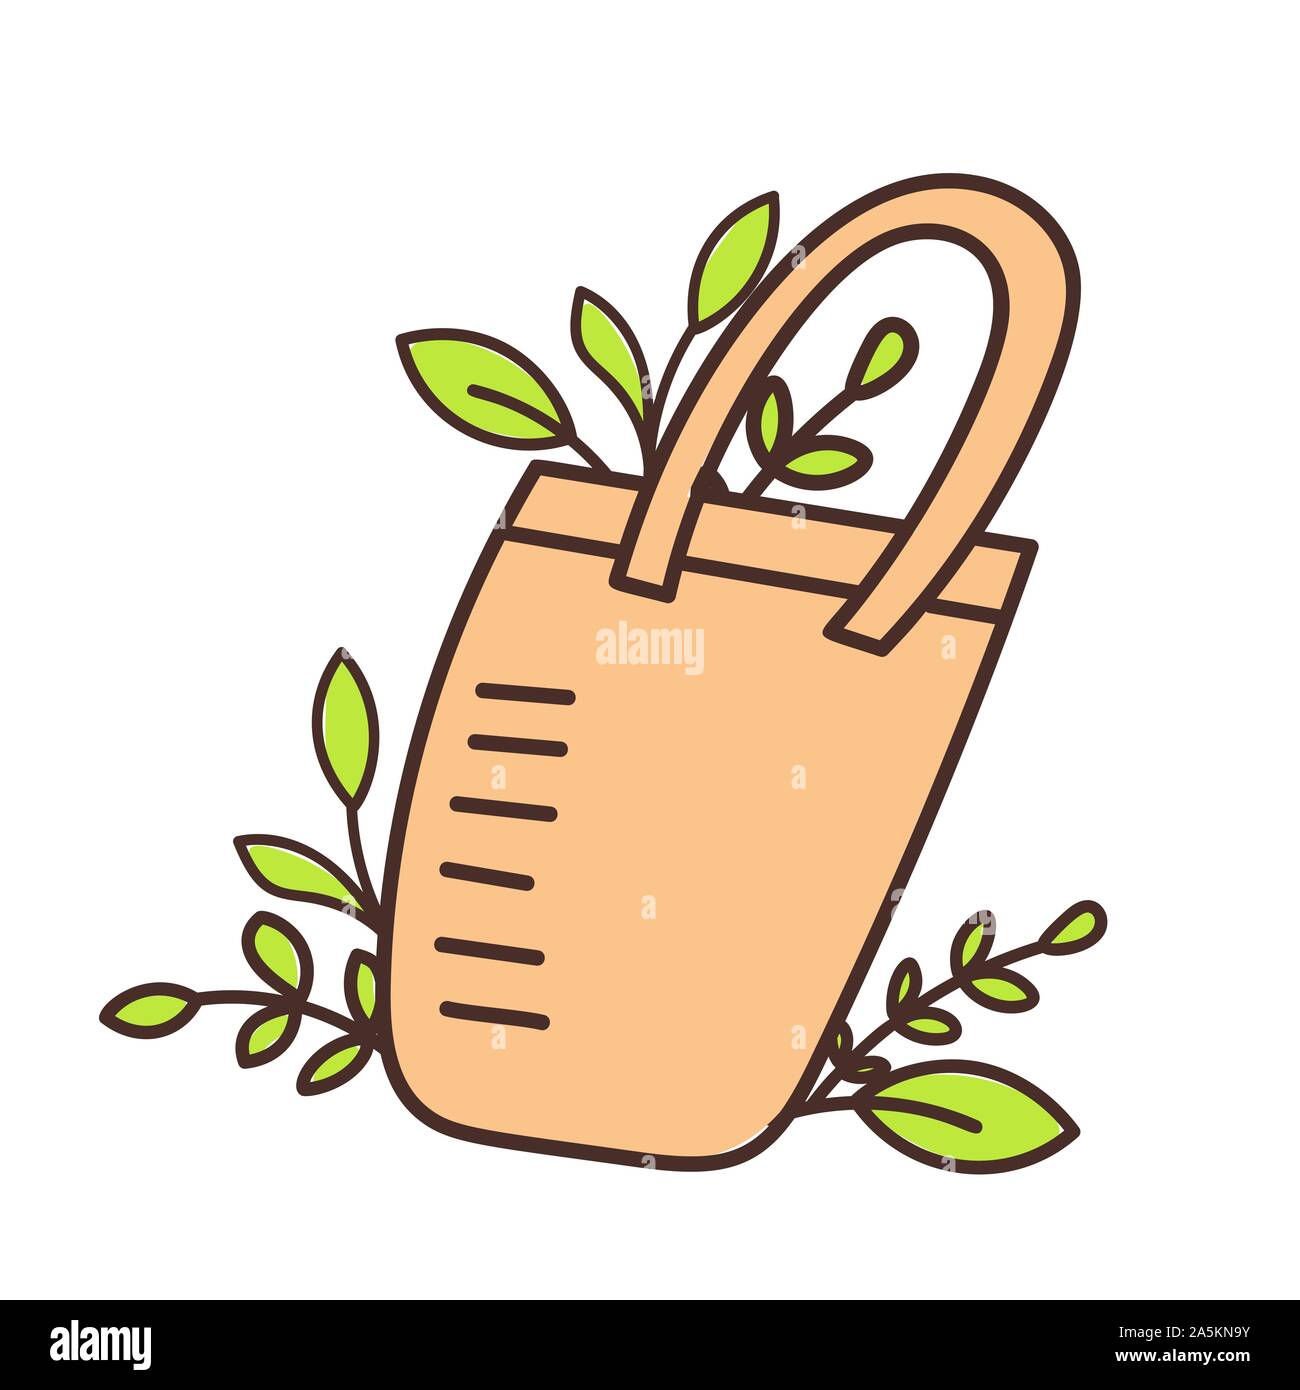 Eco bag hand drawn doodles style. Eco style. No plastic. Zero waste concept illustration. Stock Vector